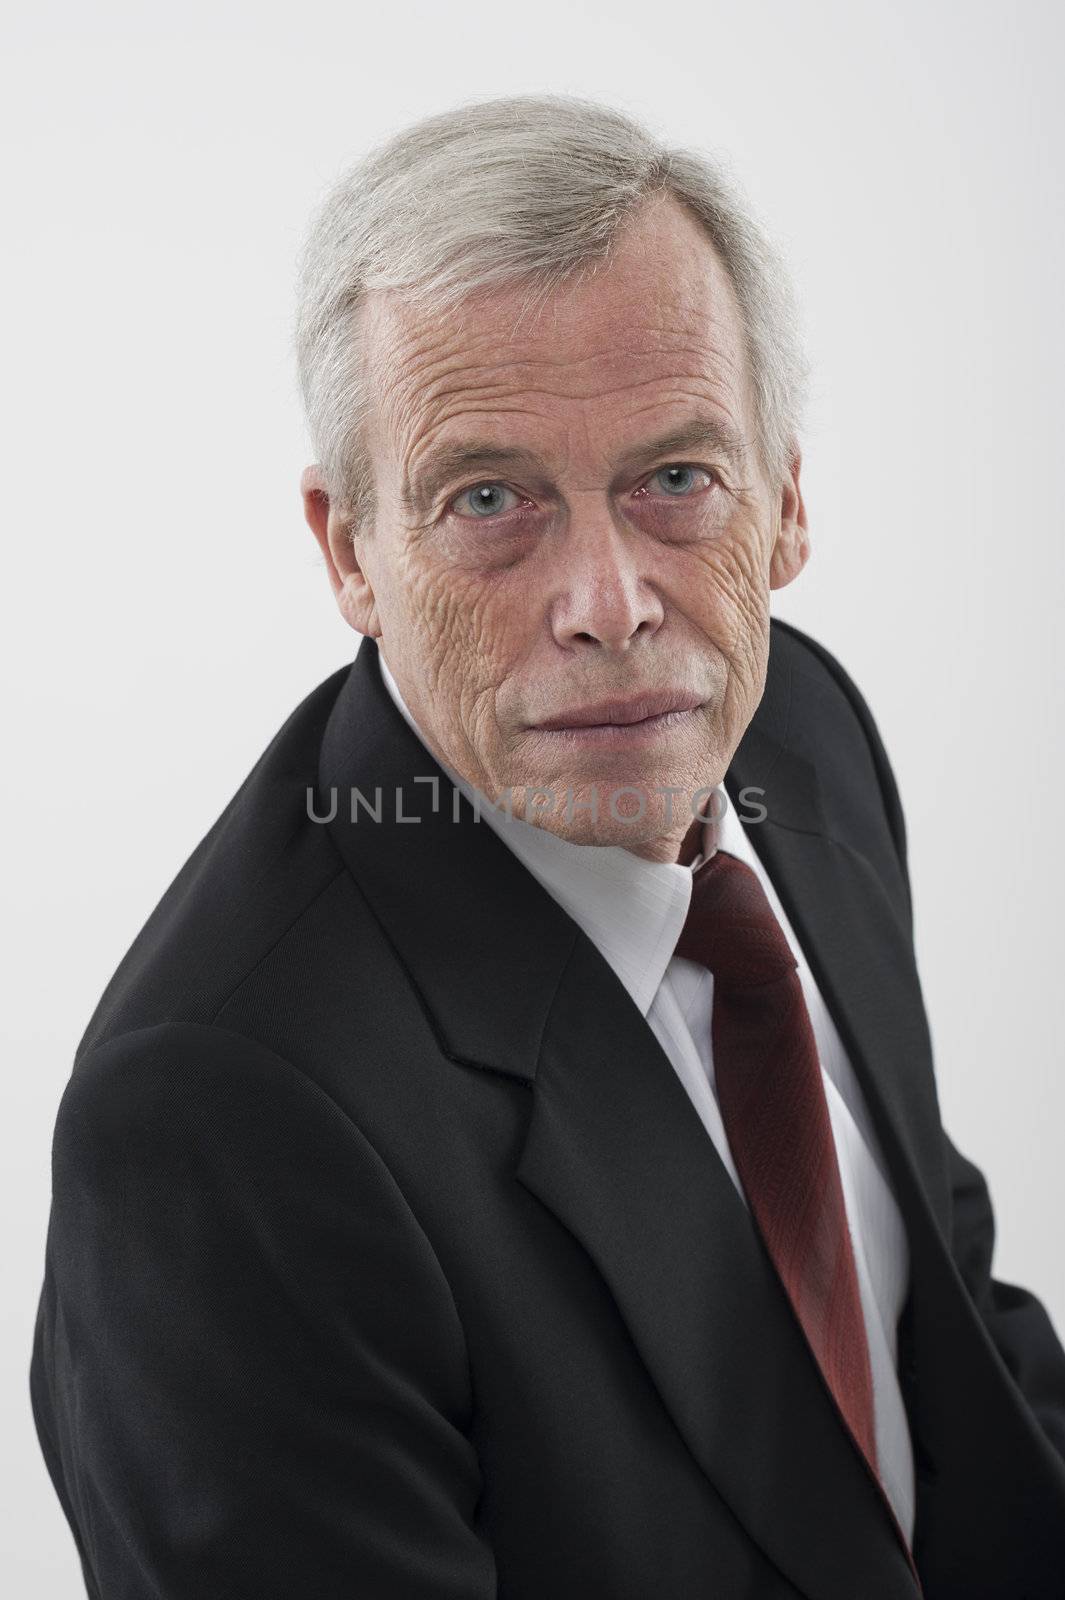 Portrait of a serious senior man by MOELLERTHOMSEN